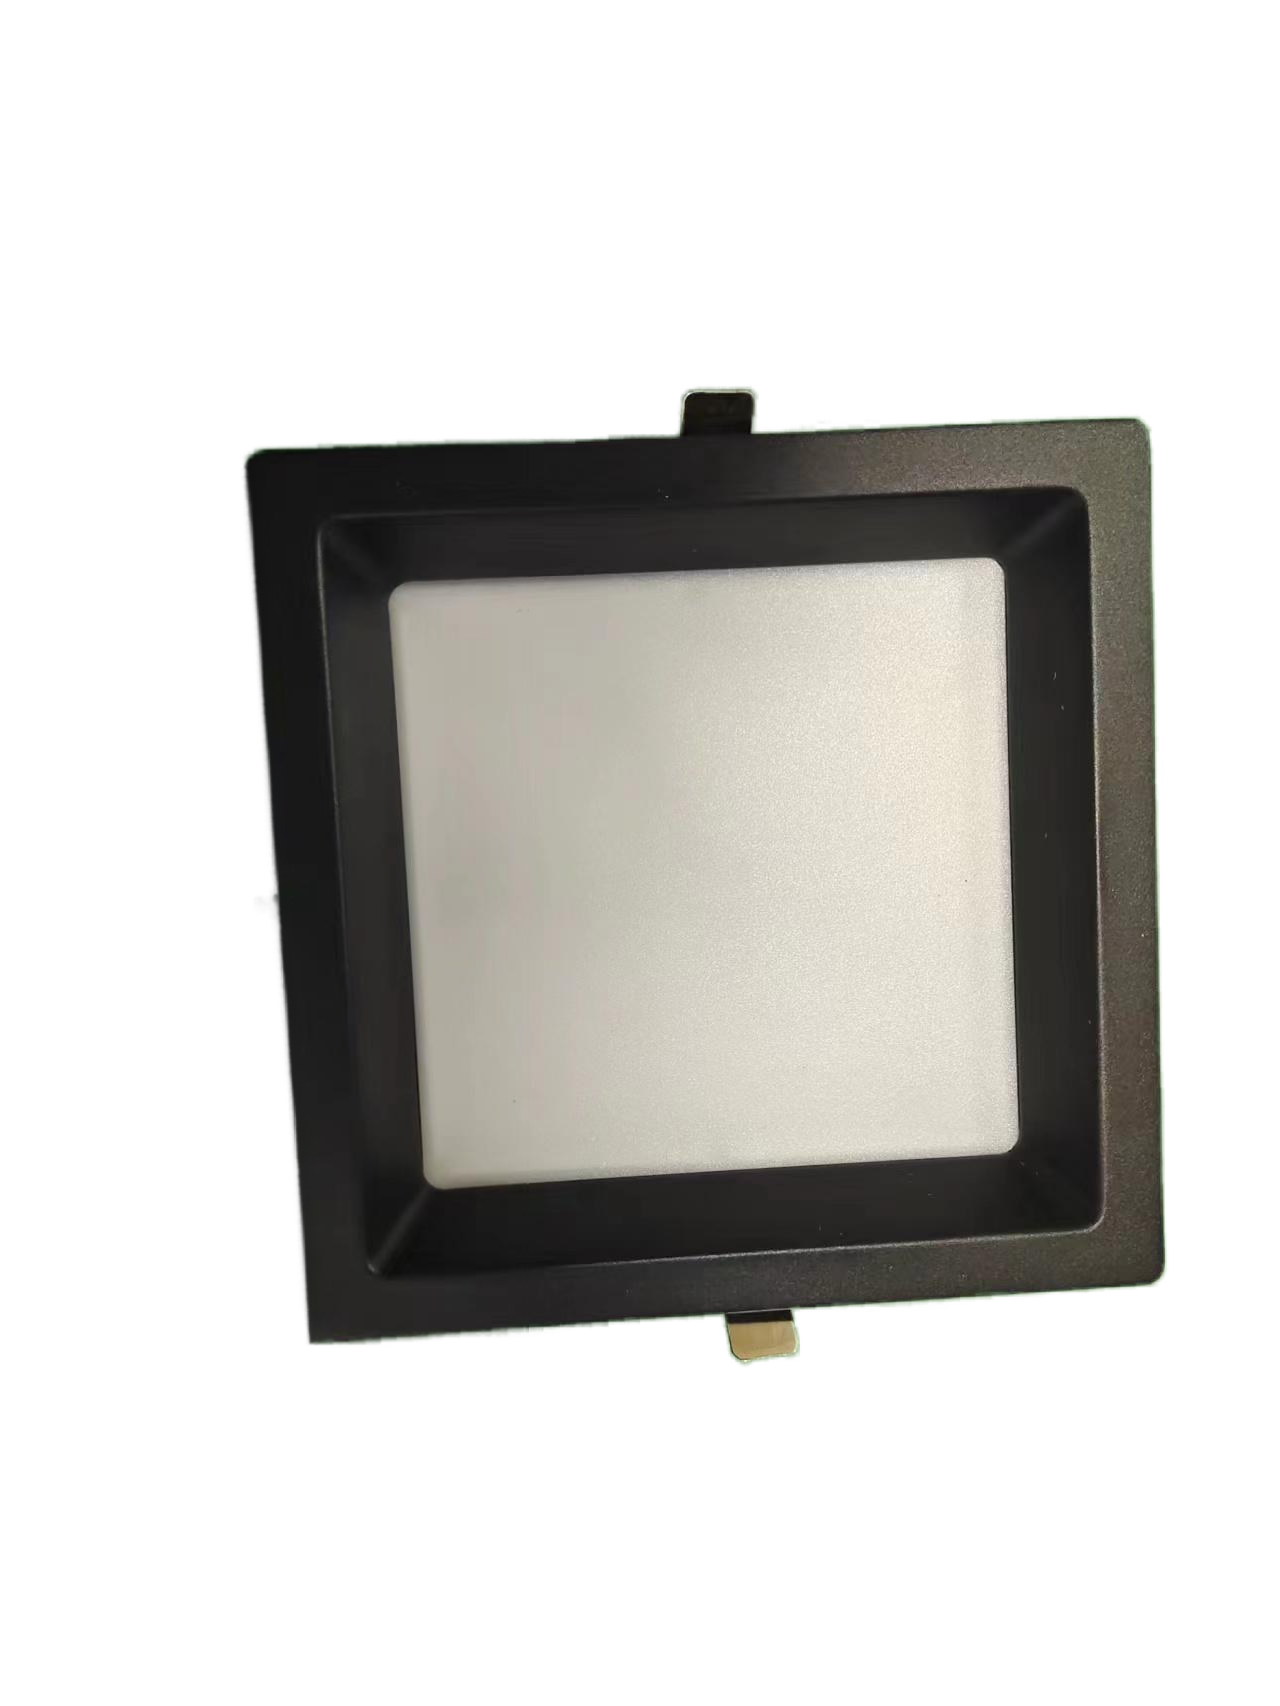 Embedded 30W square anti glare tube light, high brightness light source